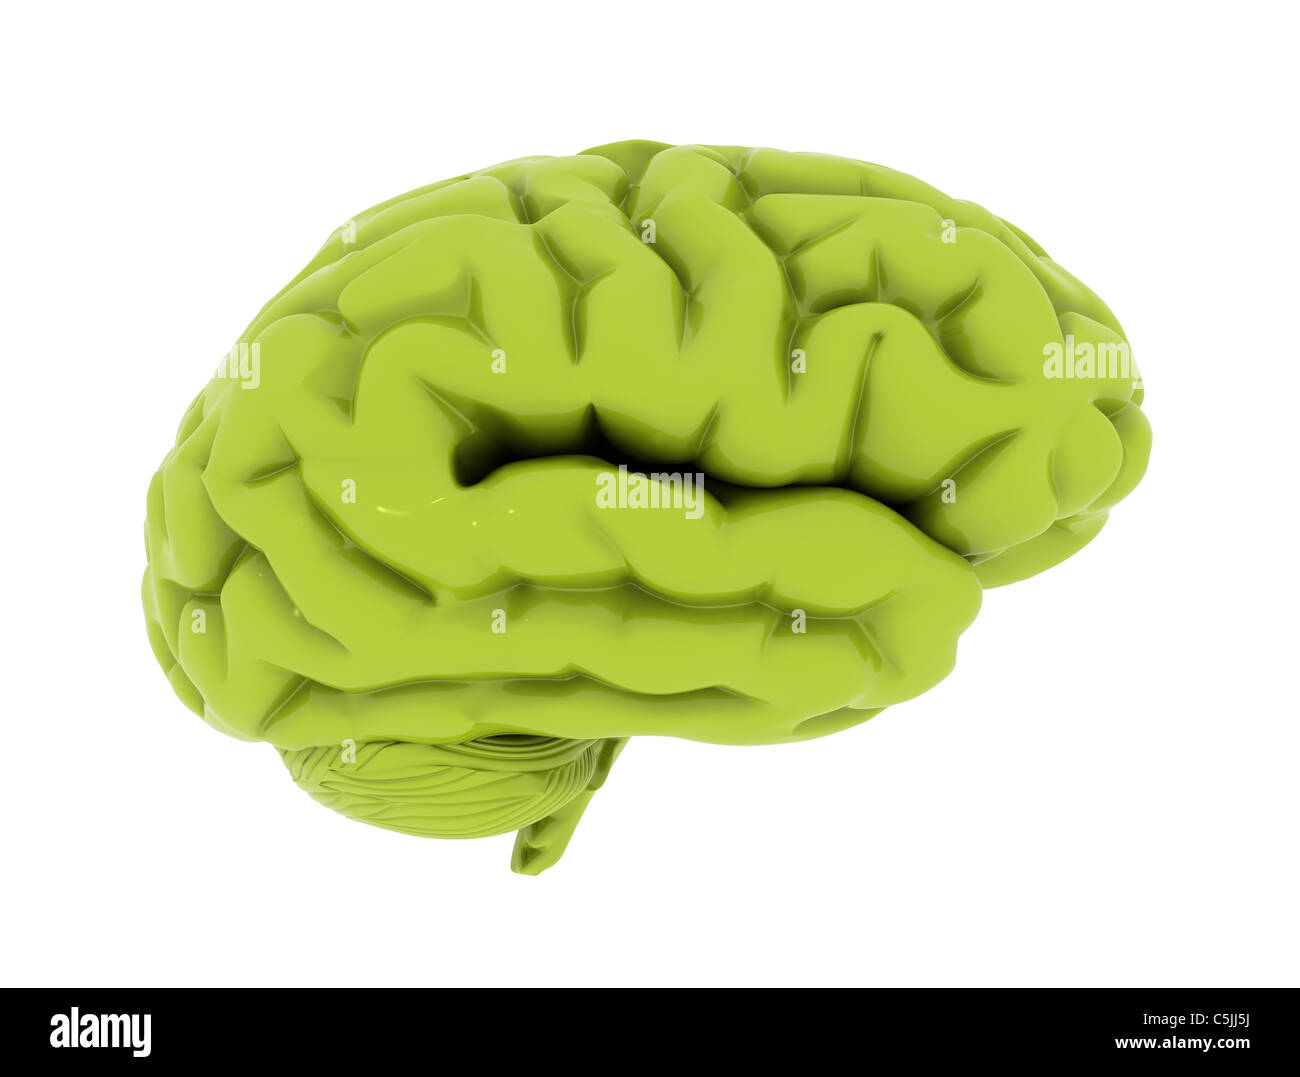 Human brain Stock Photo